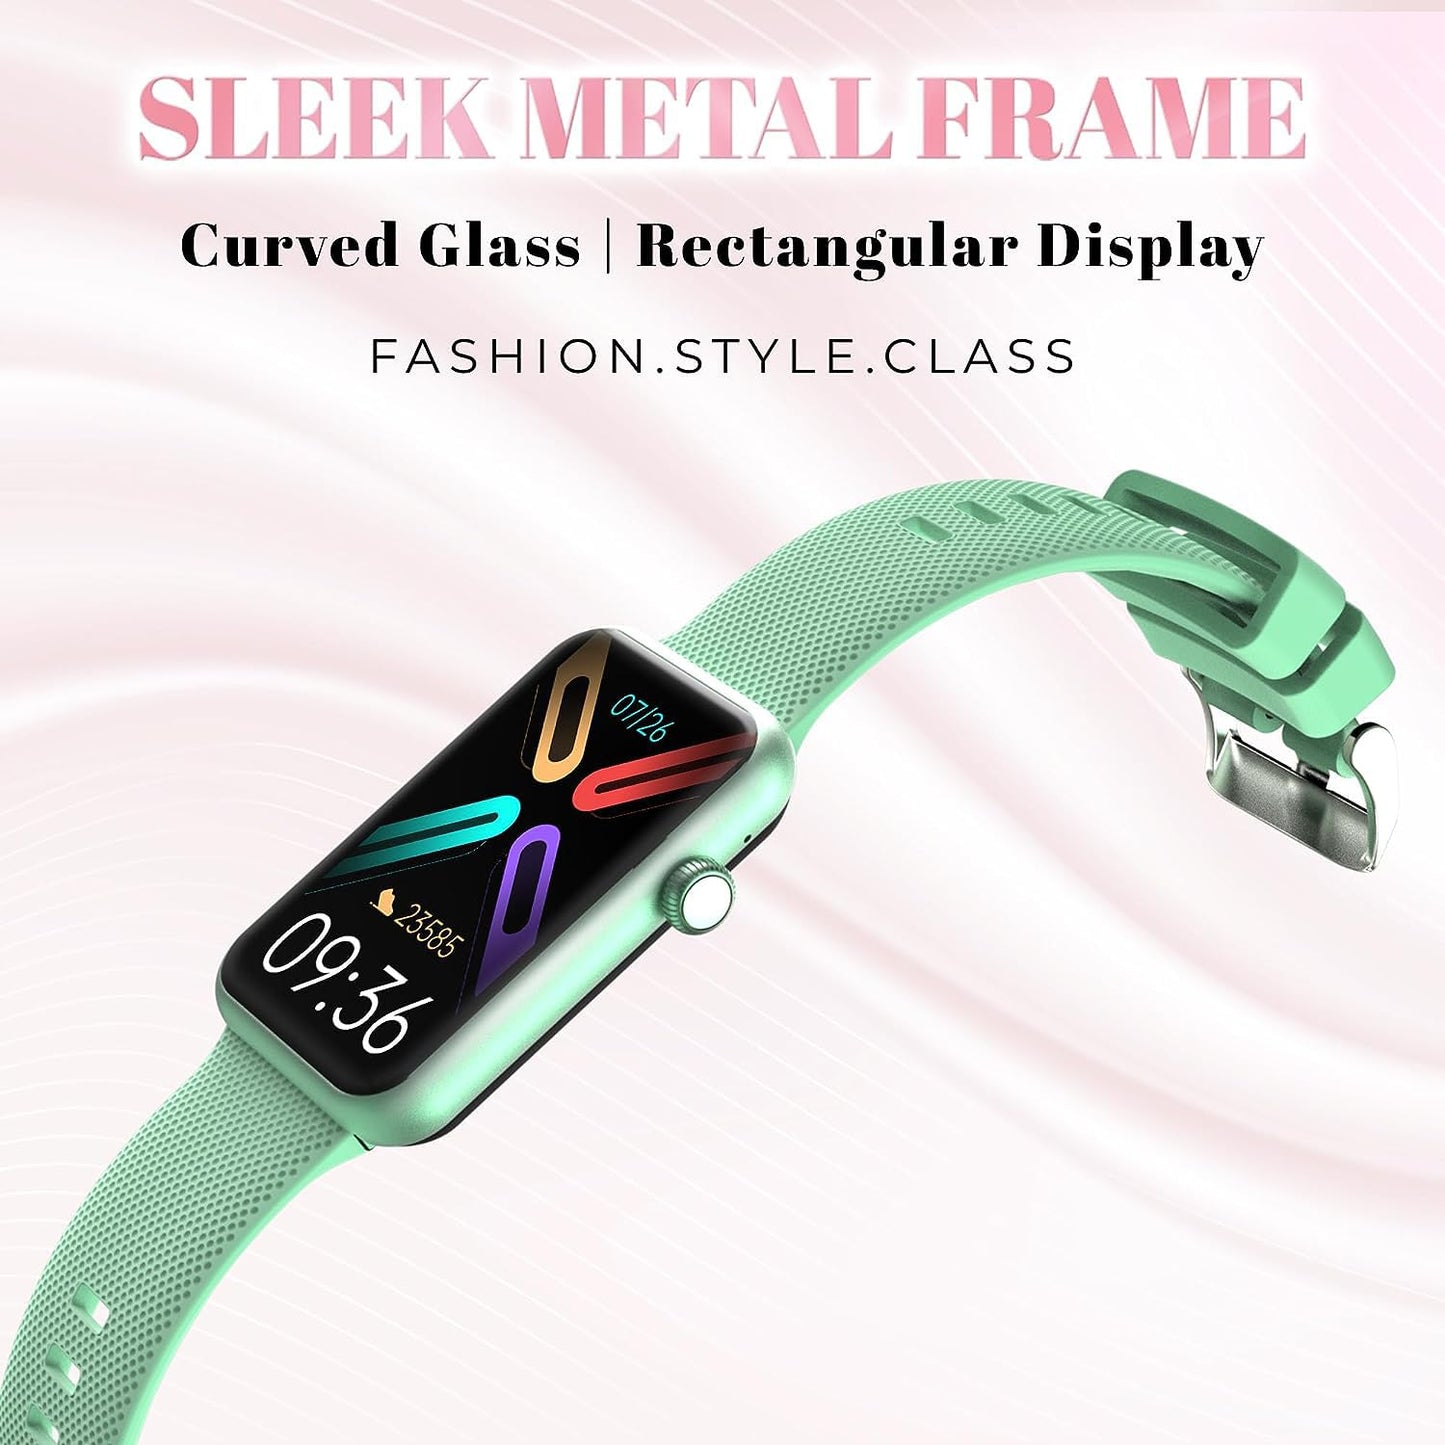 GIZMORE Slate 1.57 inch AOD Display | AI | Sports Modes | SpO2, BT Calling Smartwatch (Green)